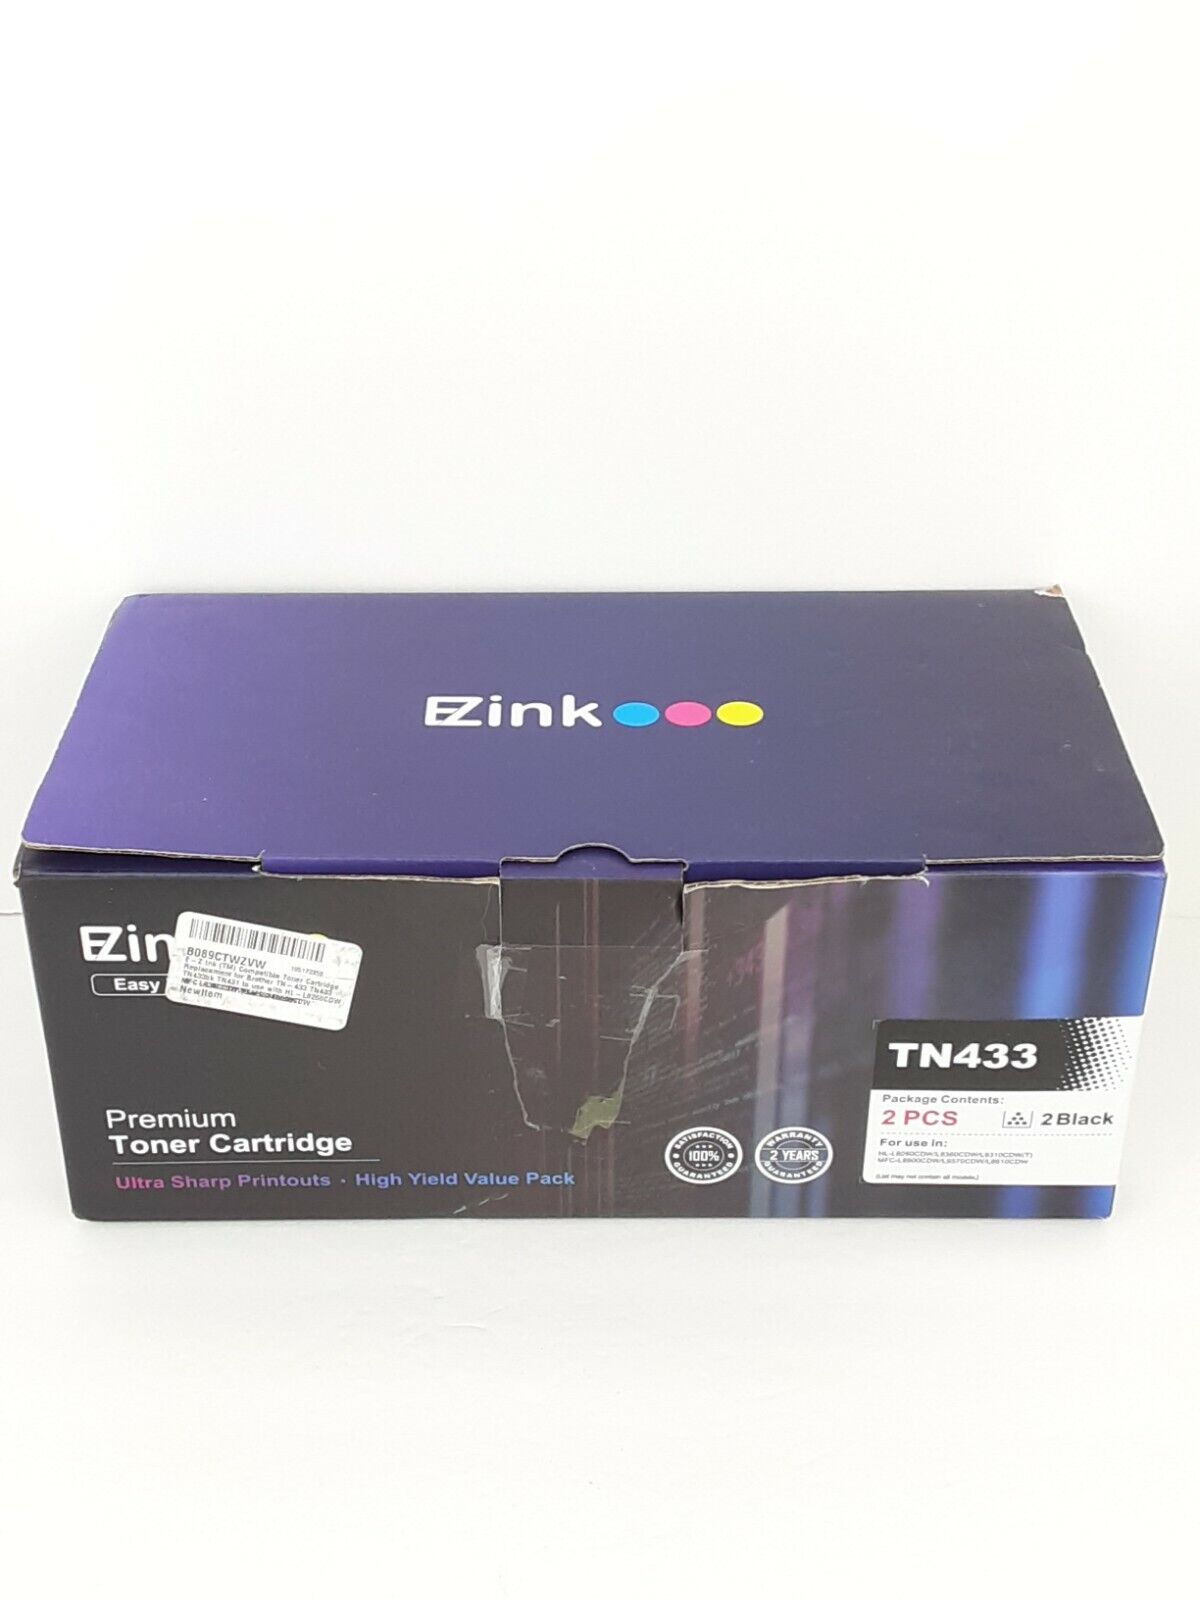 NEW EZink 2 PACK Black TN433 Toner Premium High Yield FAST SHIP Sharp Cartridges